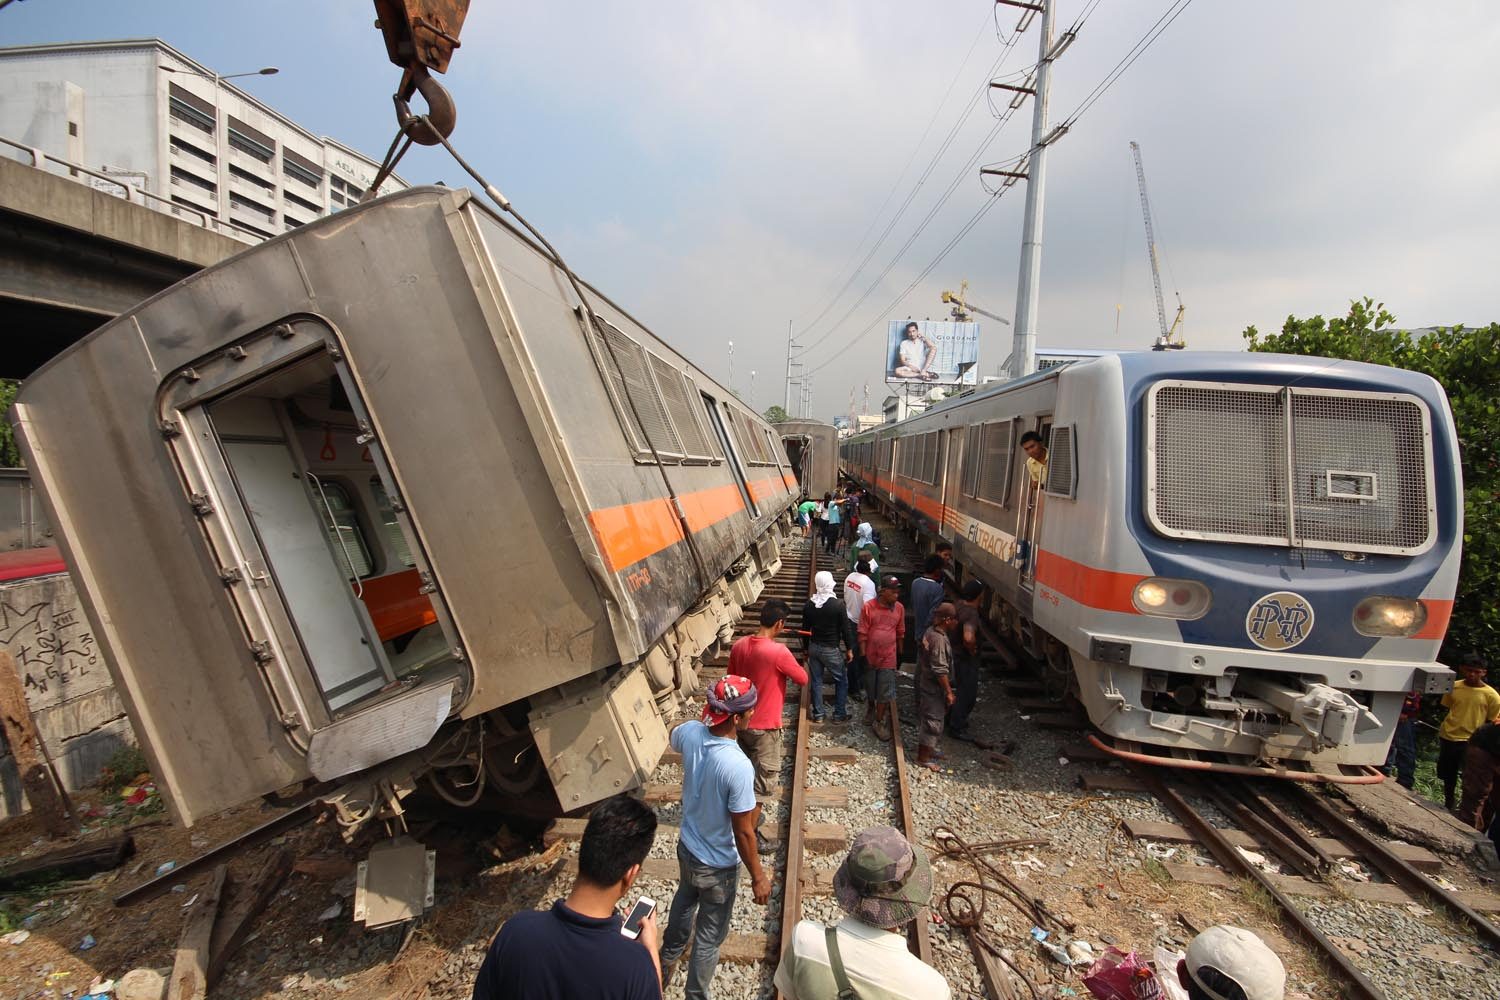 PNR suspends train service indefinitely